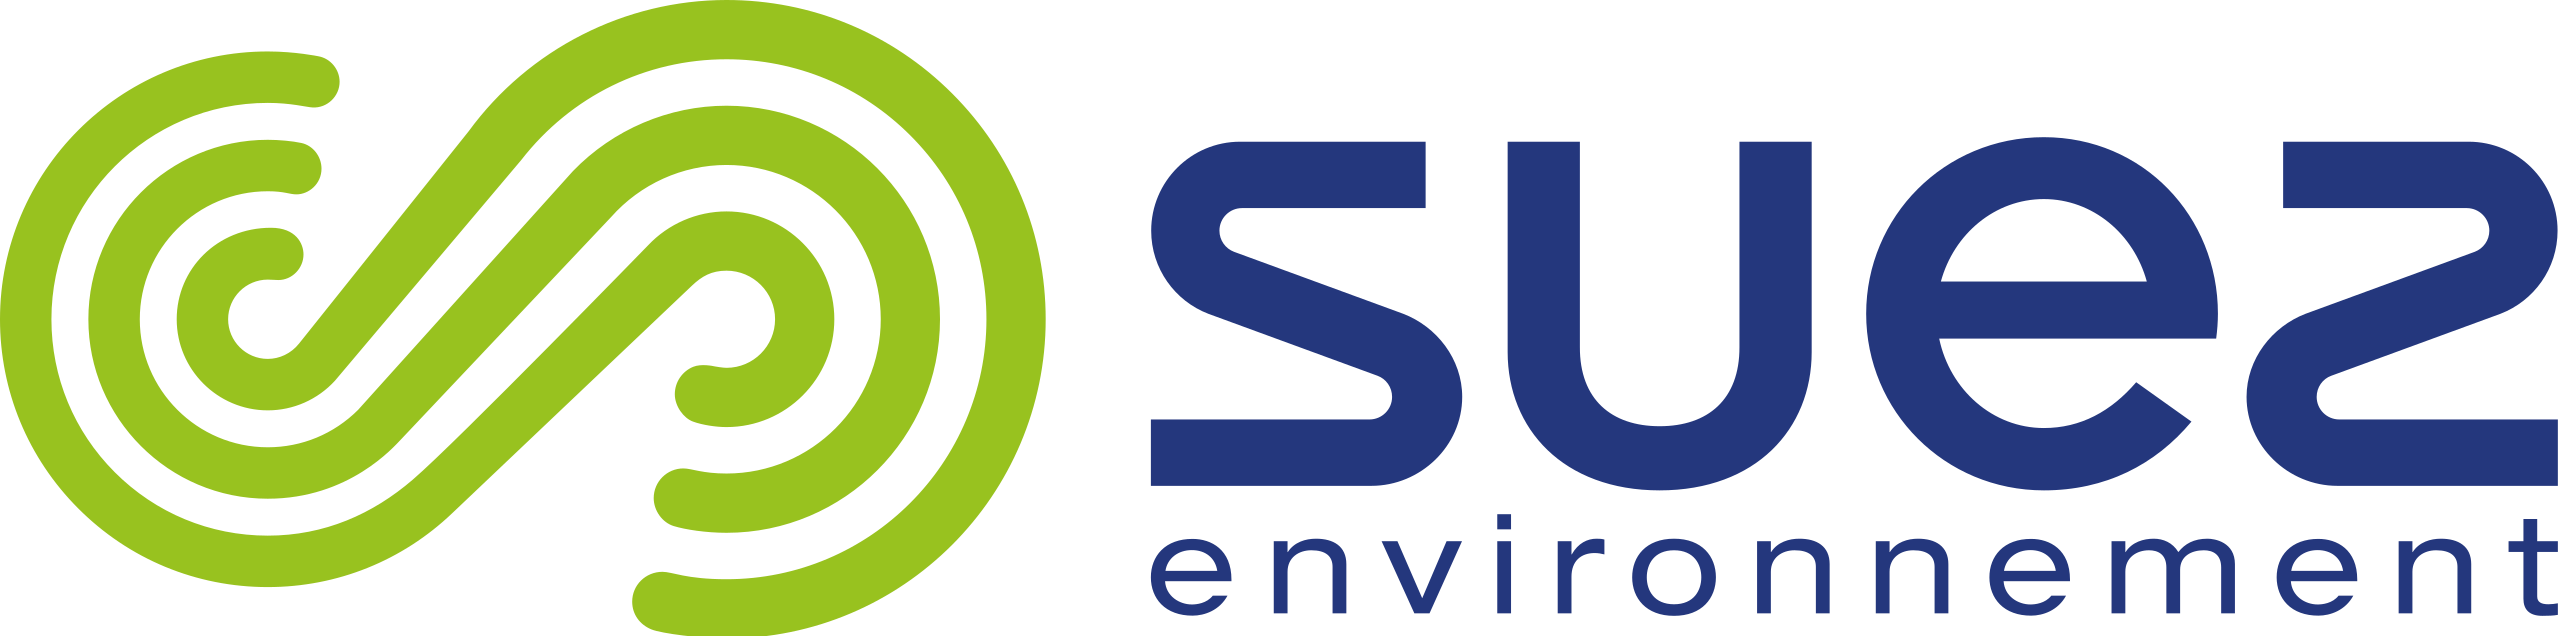 suez environment logo 